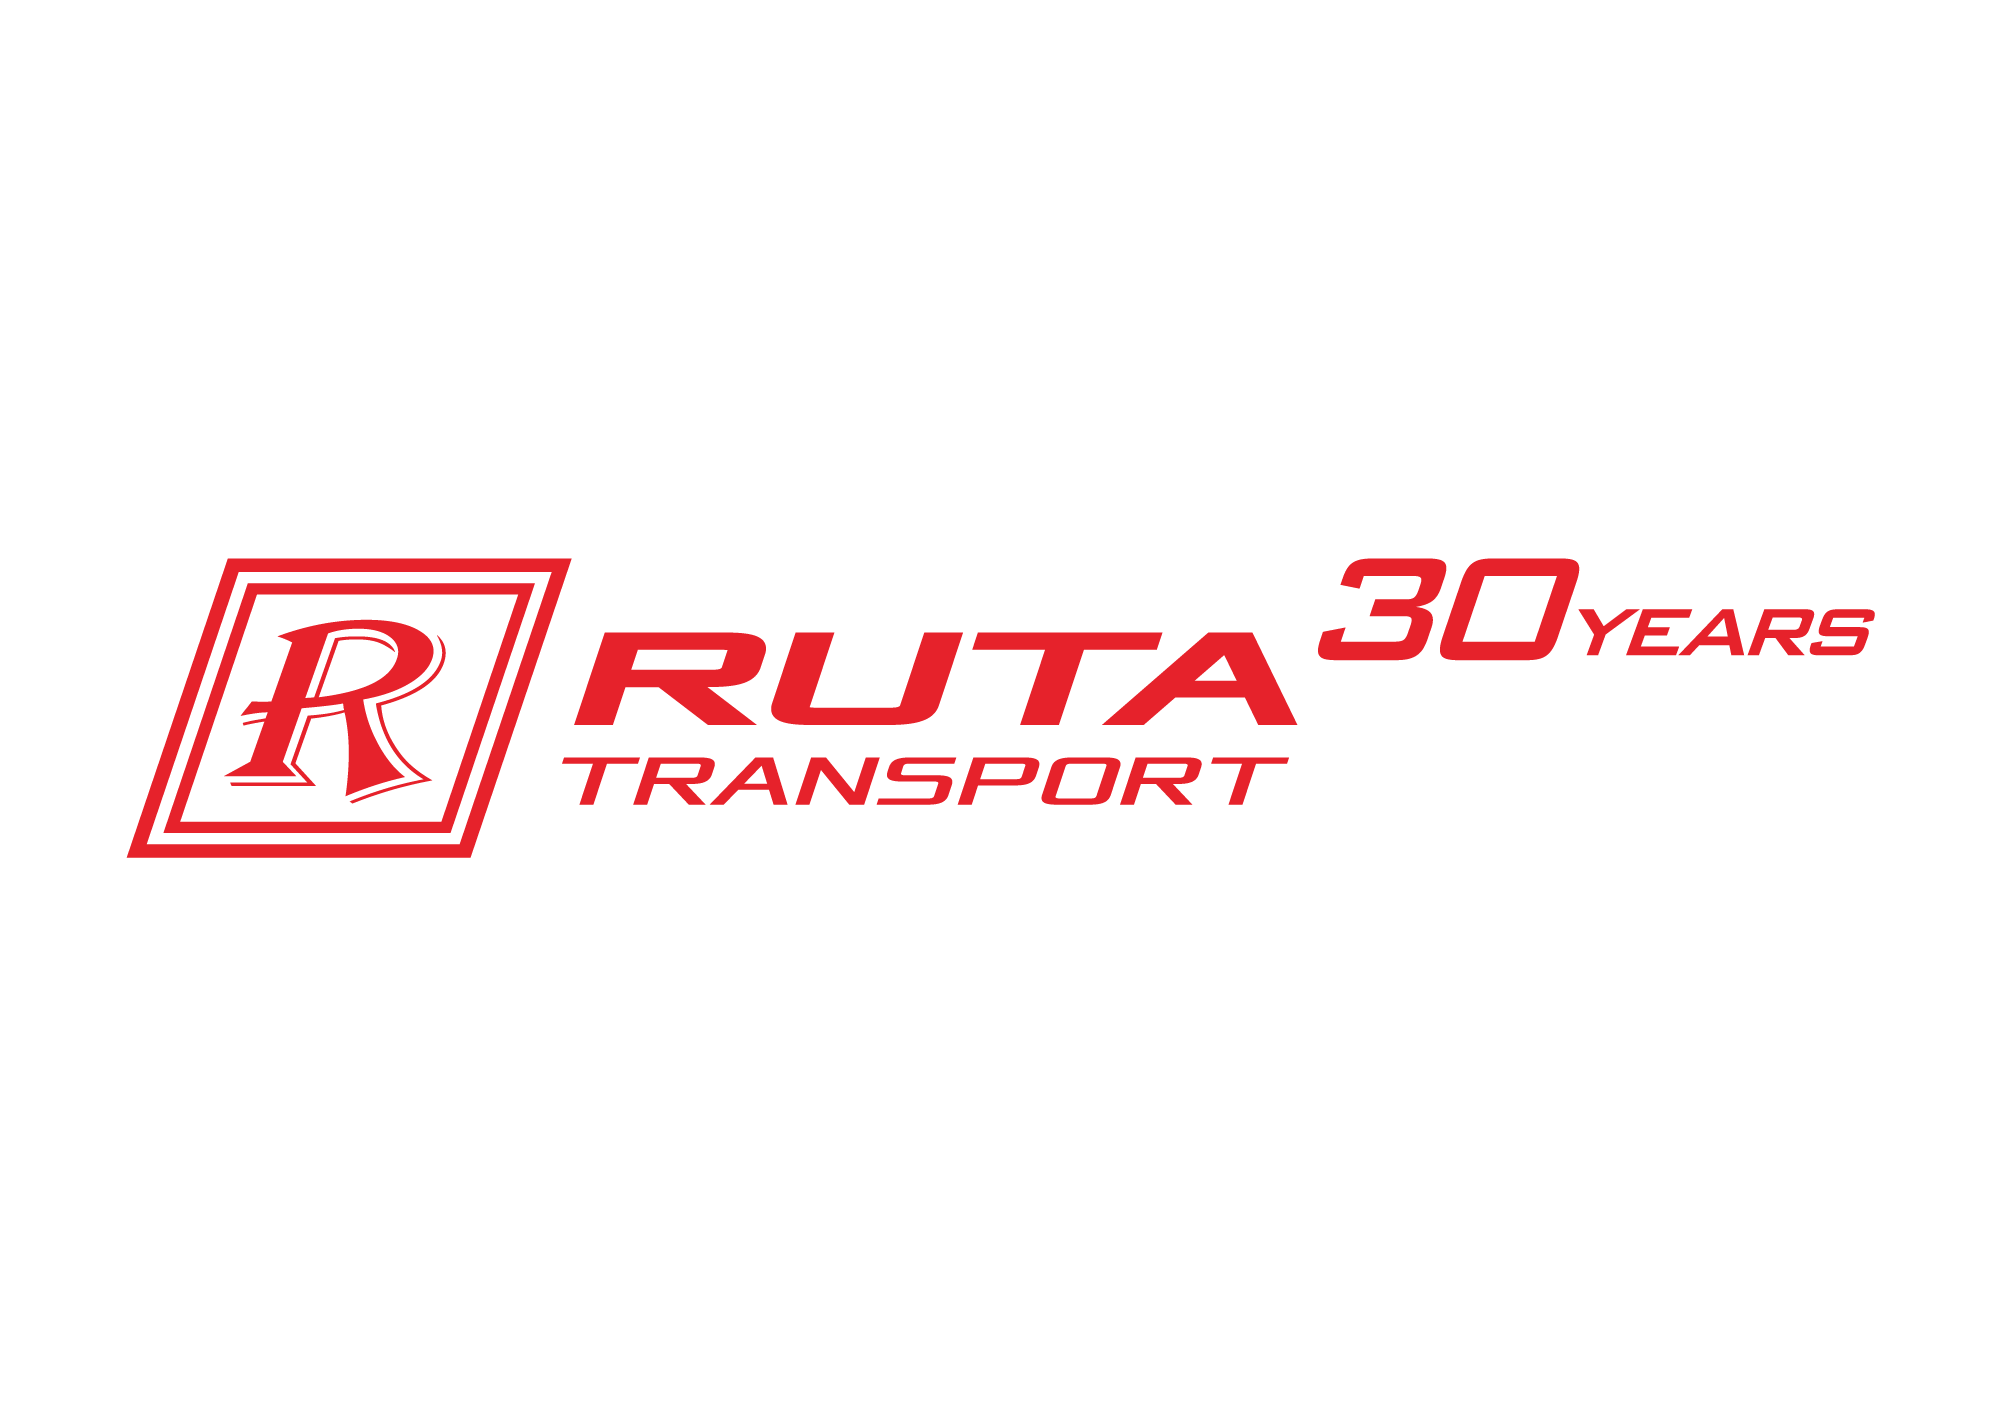 Ruta Transport 30 years